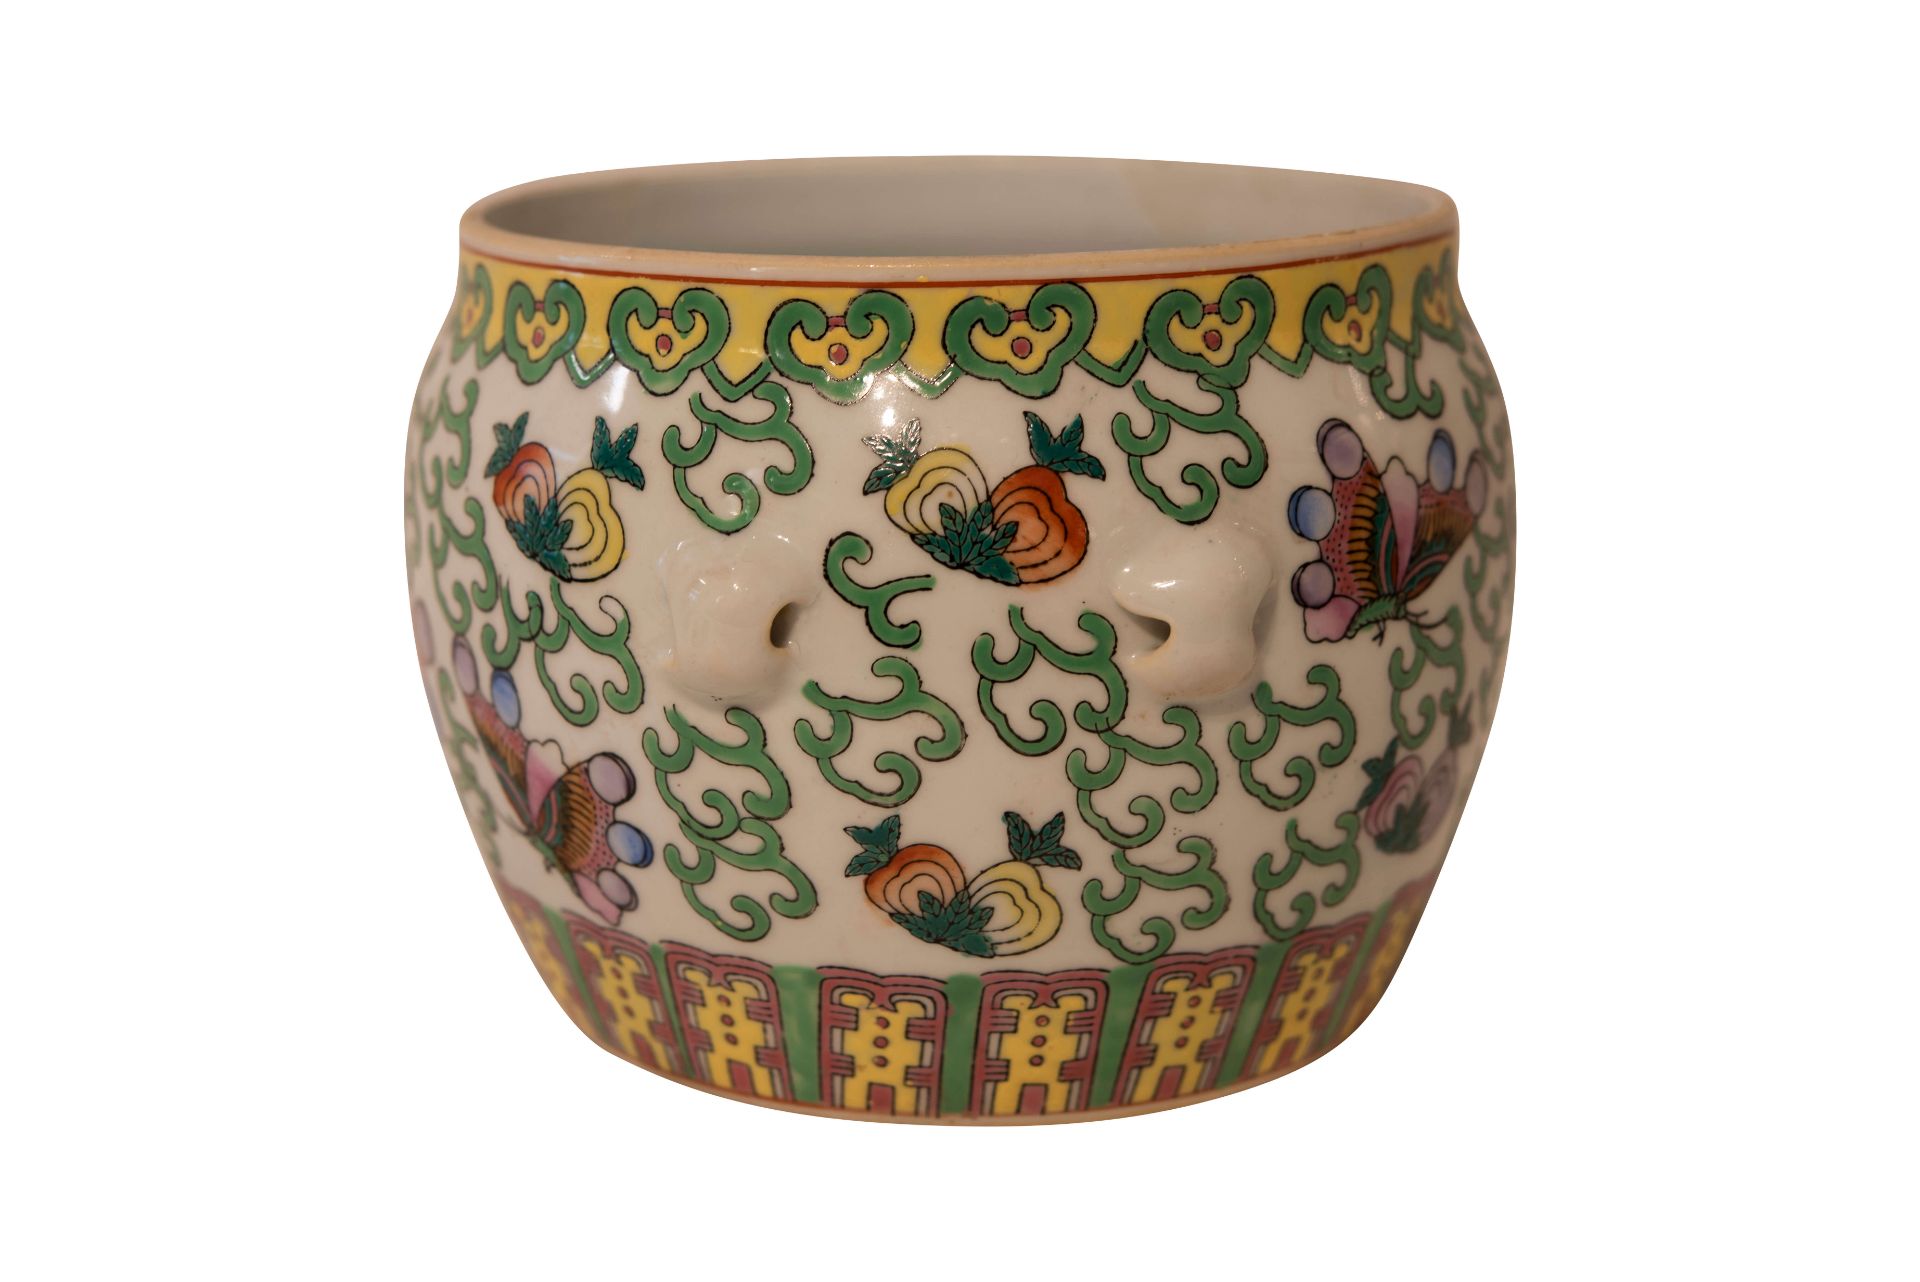 Handbemalter bunter Asiatischer Keramik Topf | Colorful Hand Painted Asian Ceramic Pot - Image 3 of 5